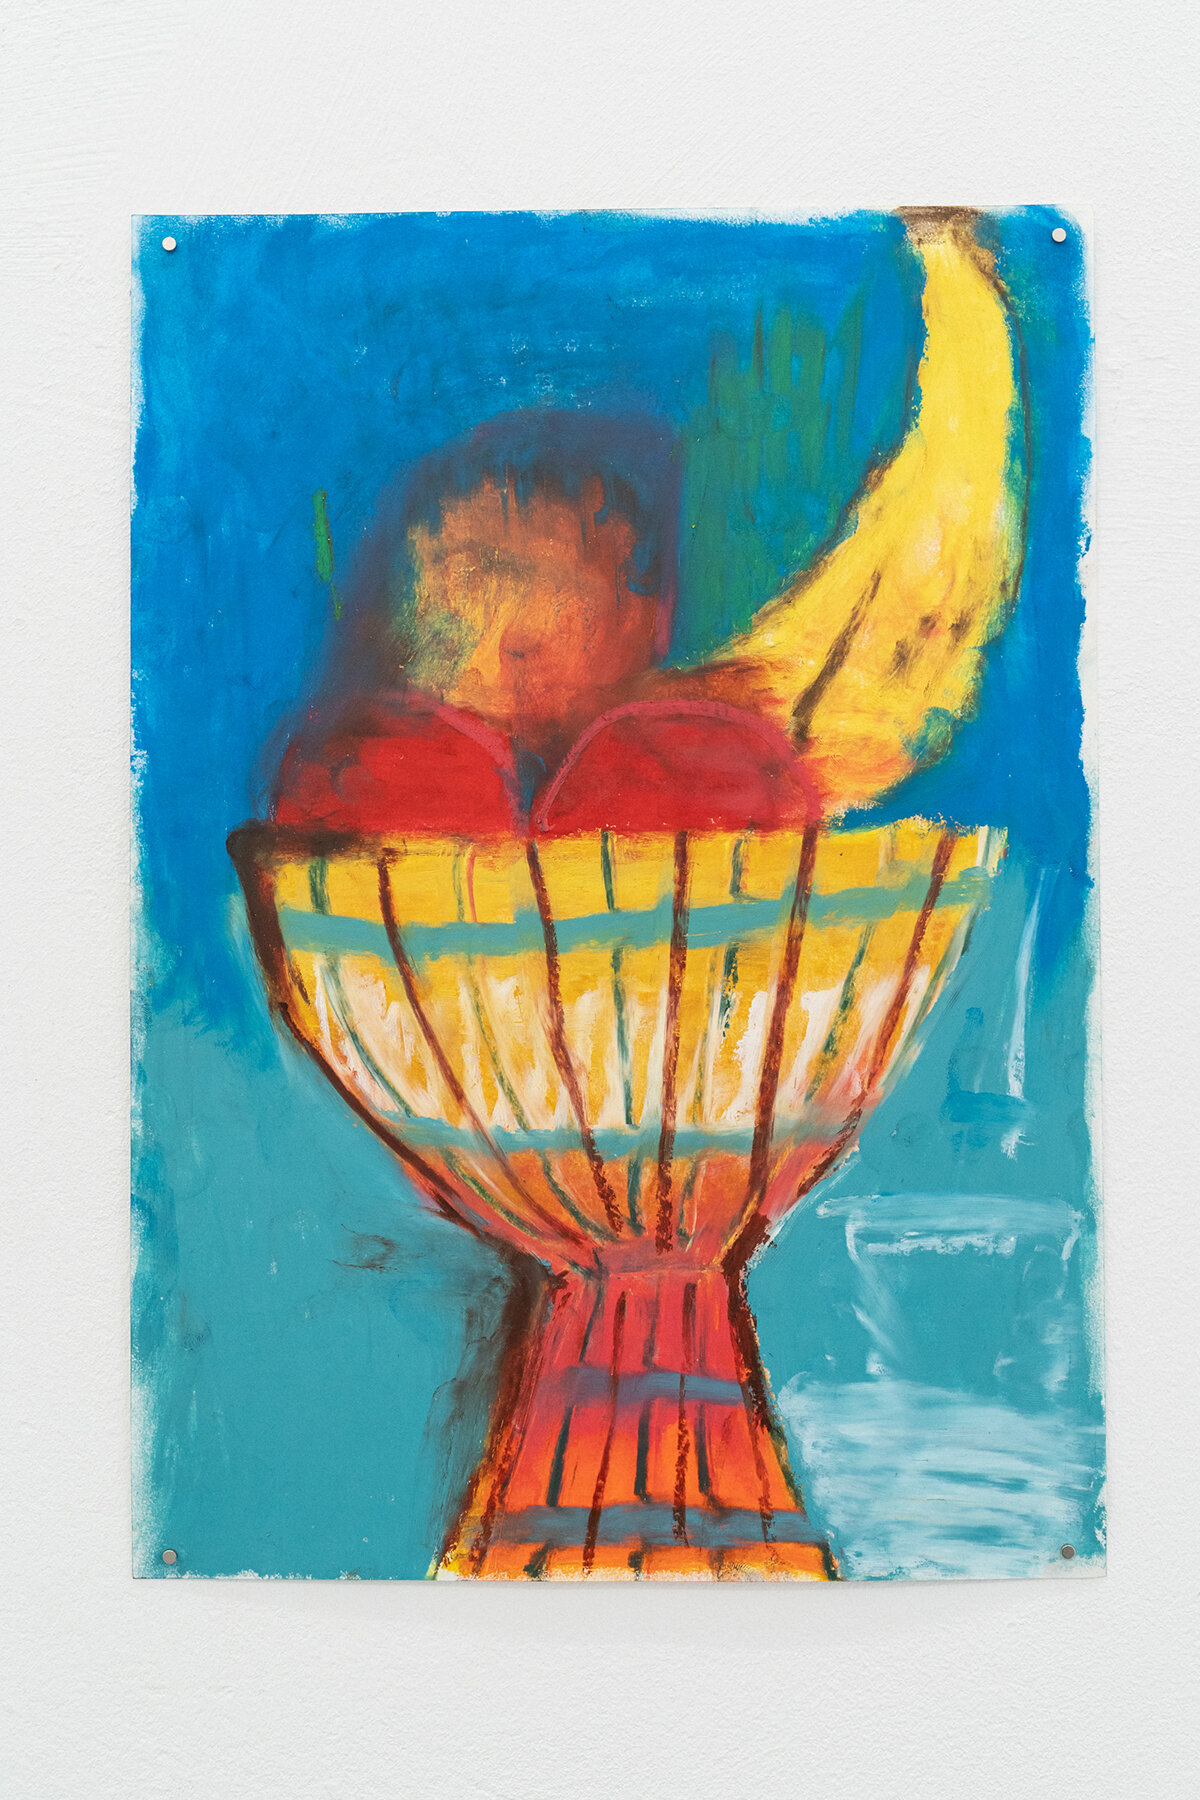 Satoko Kako, My Imaginary Vases, oil pastel on paper, 21 x 30 cm, 2021